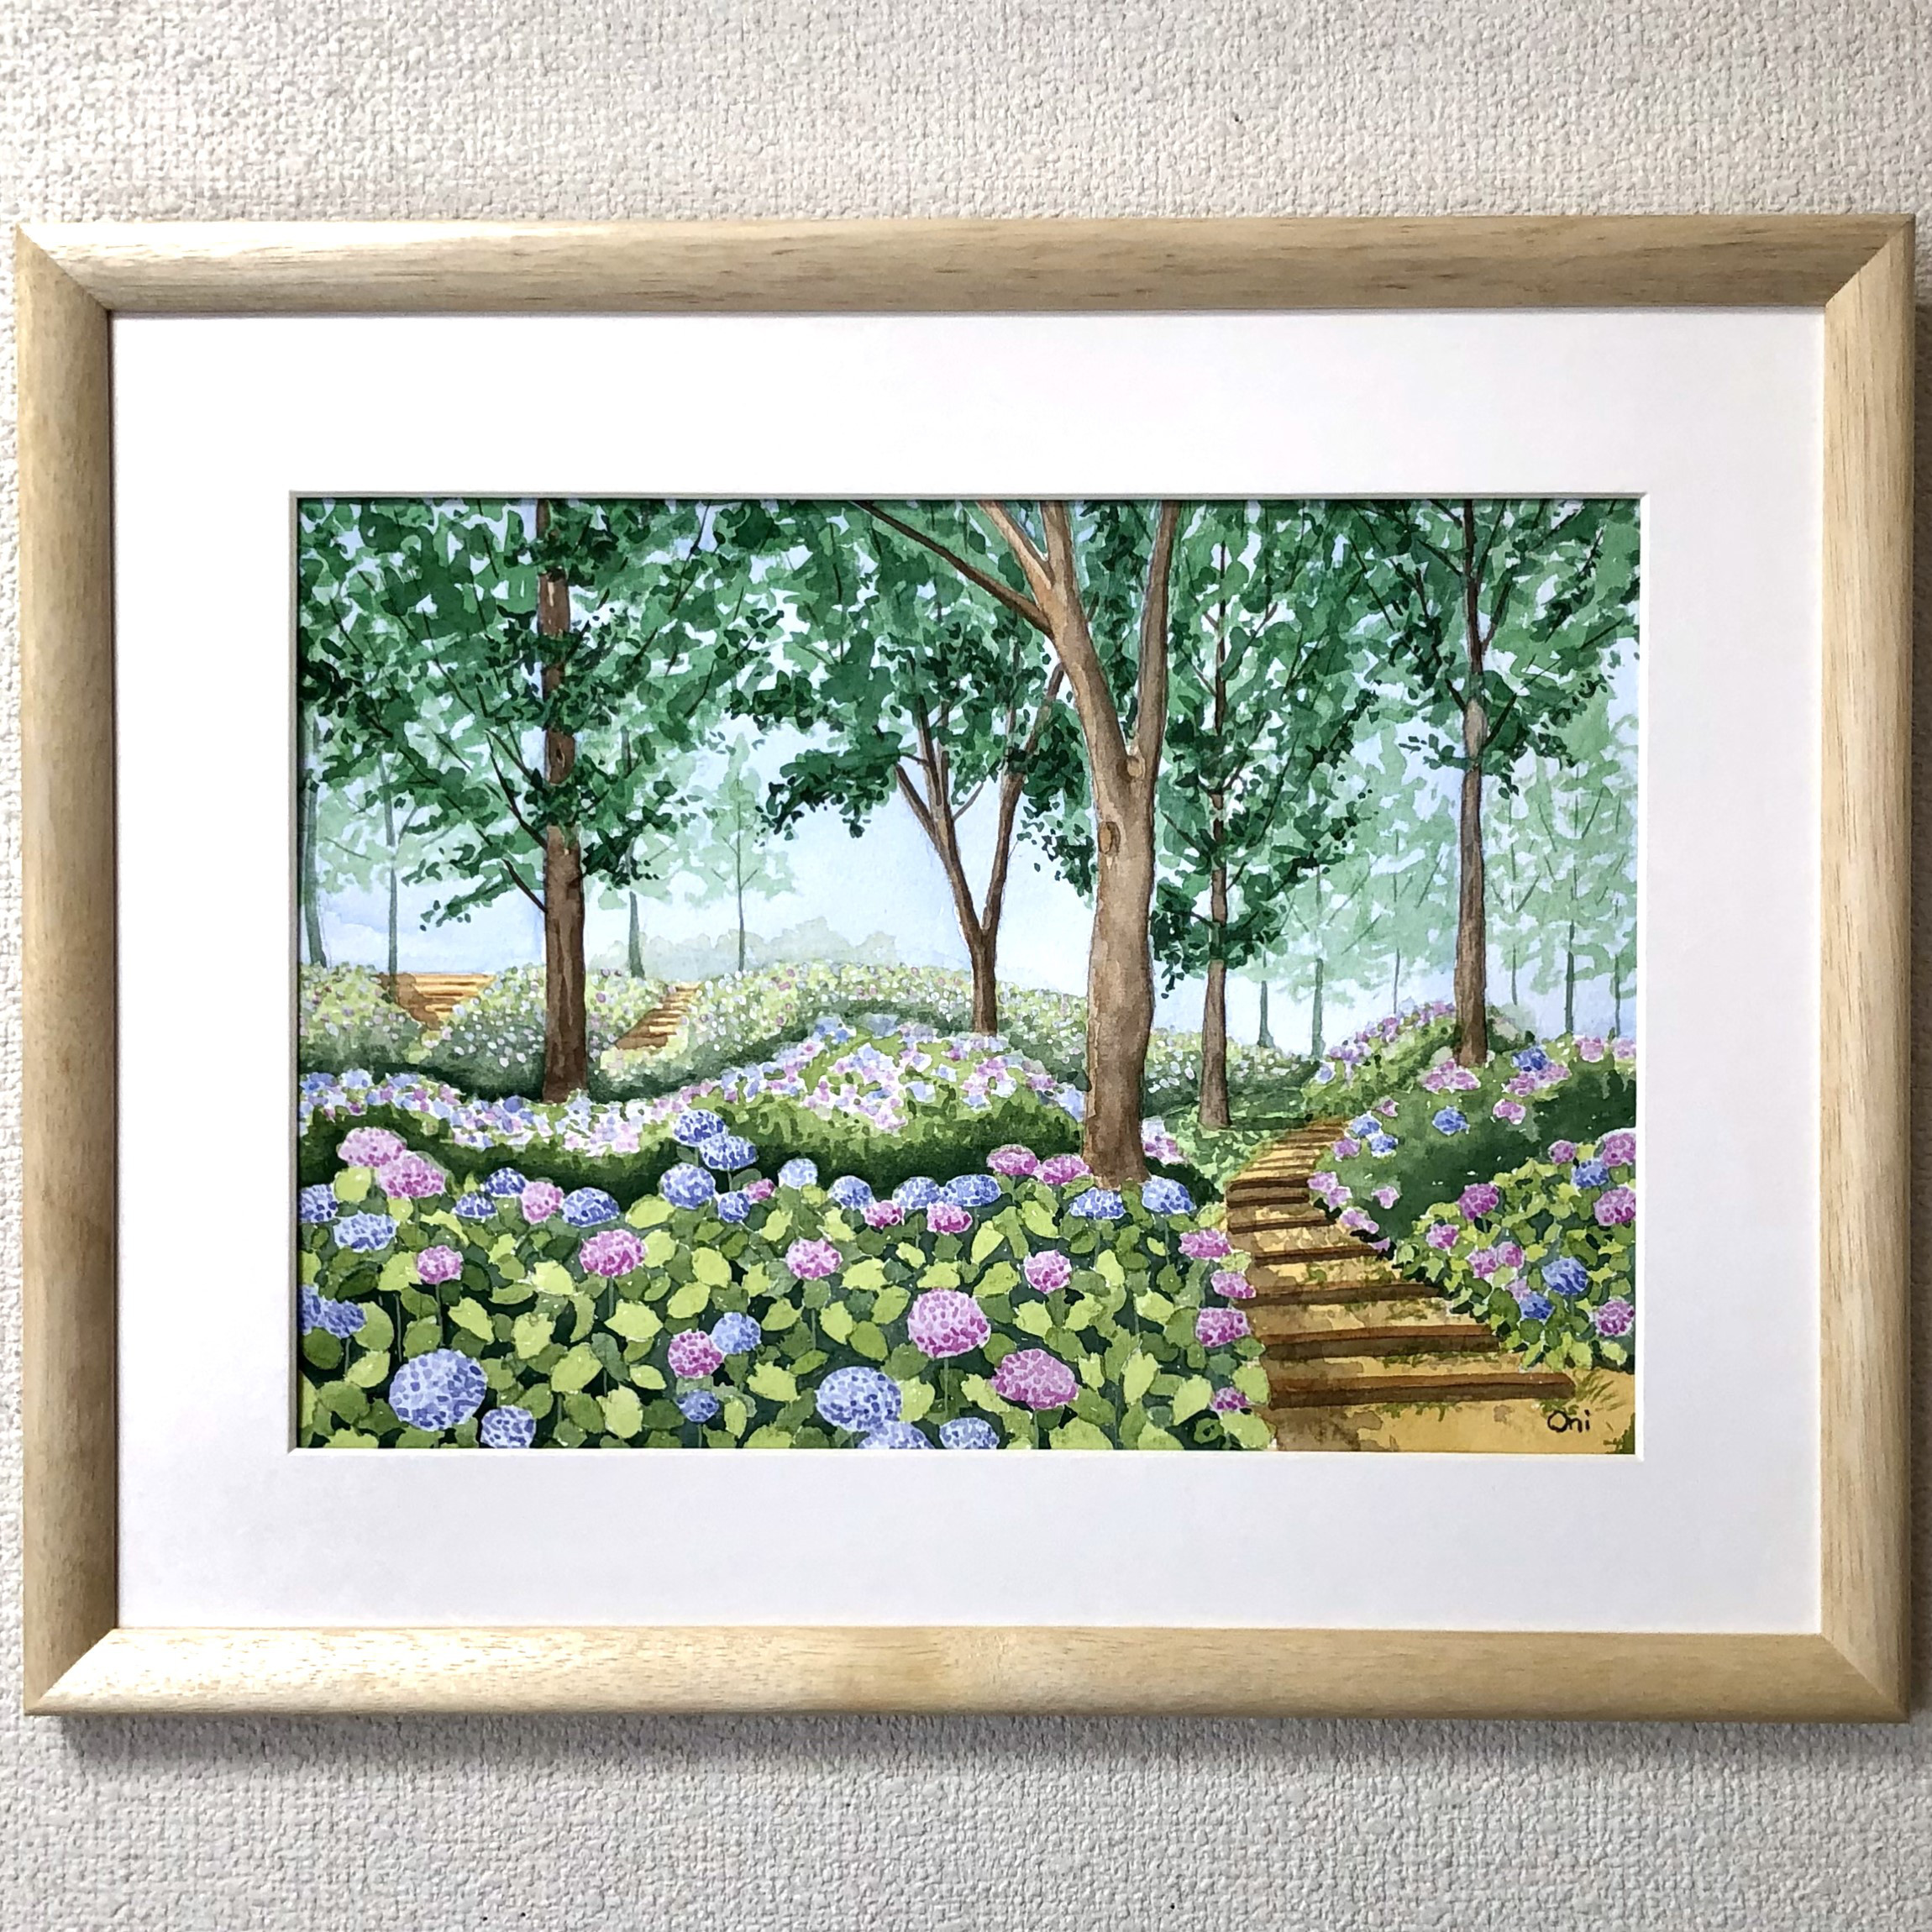 「紫陽花の丘」透明水彩画 原画 風景画 額縁付 F4サイズ 絵画 Oni 